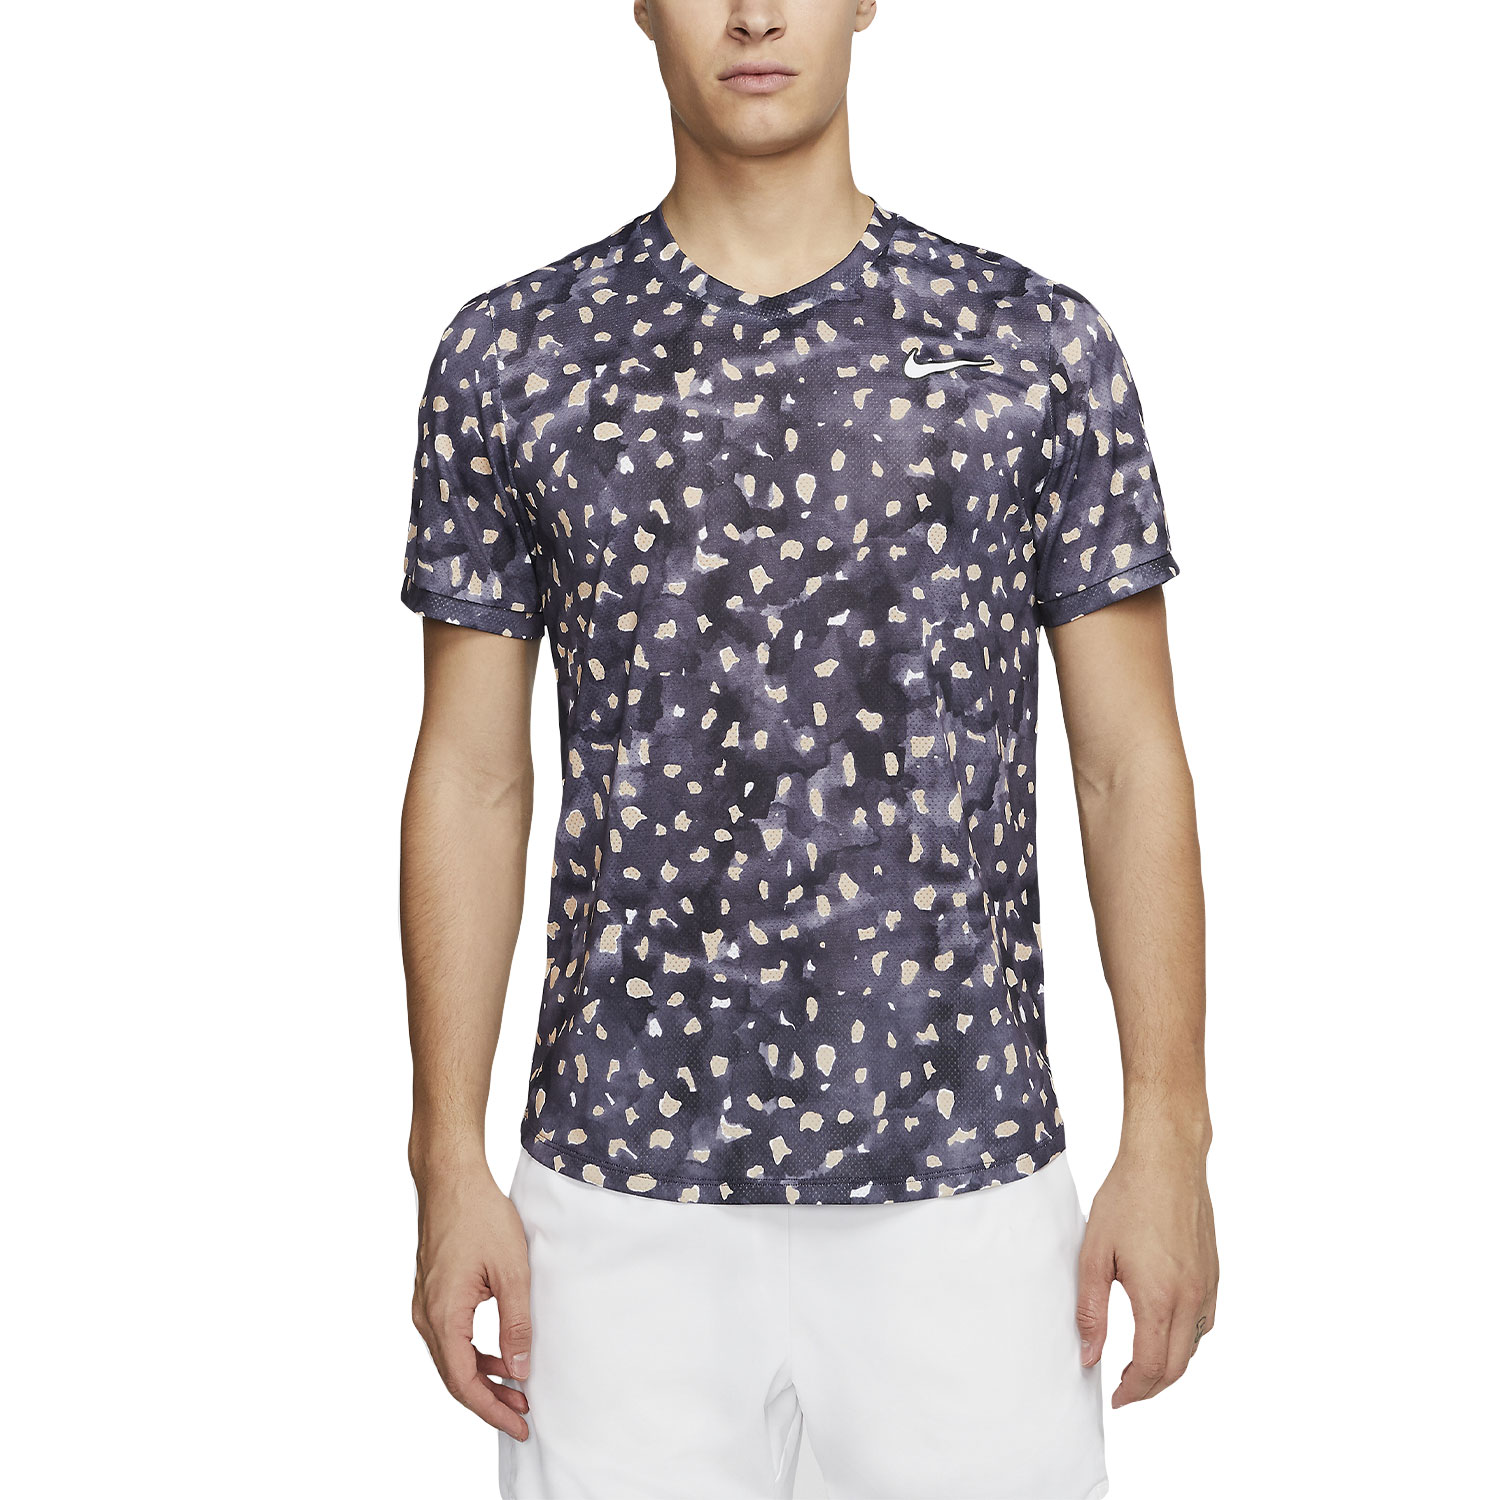 Nike Court Challenger Print Men's Tennis T-Shirt - Gridiron